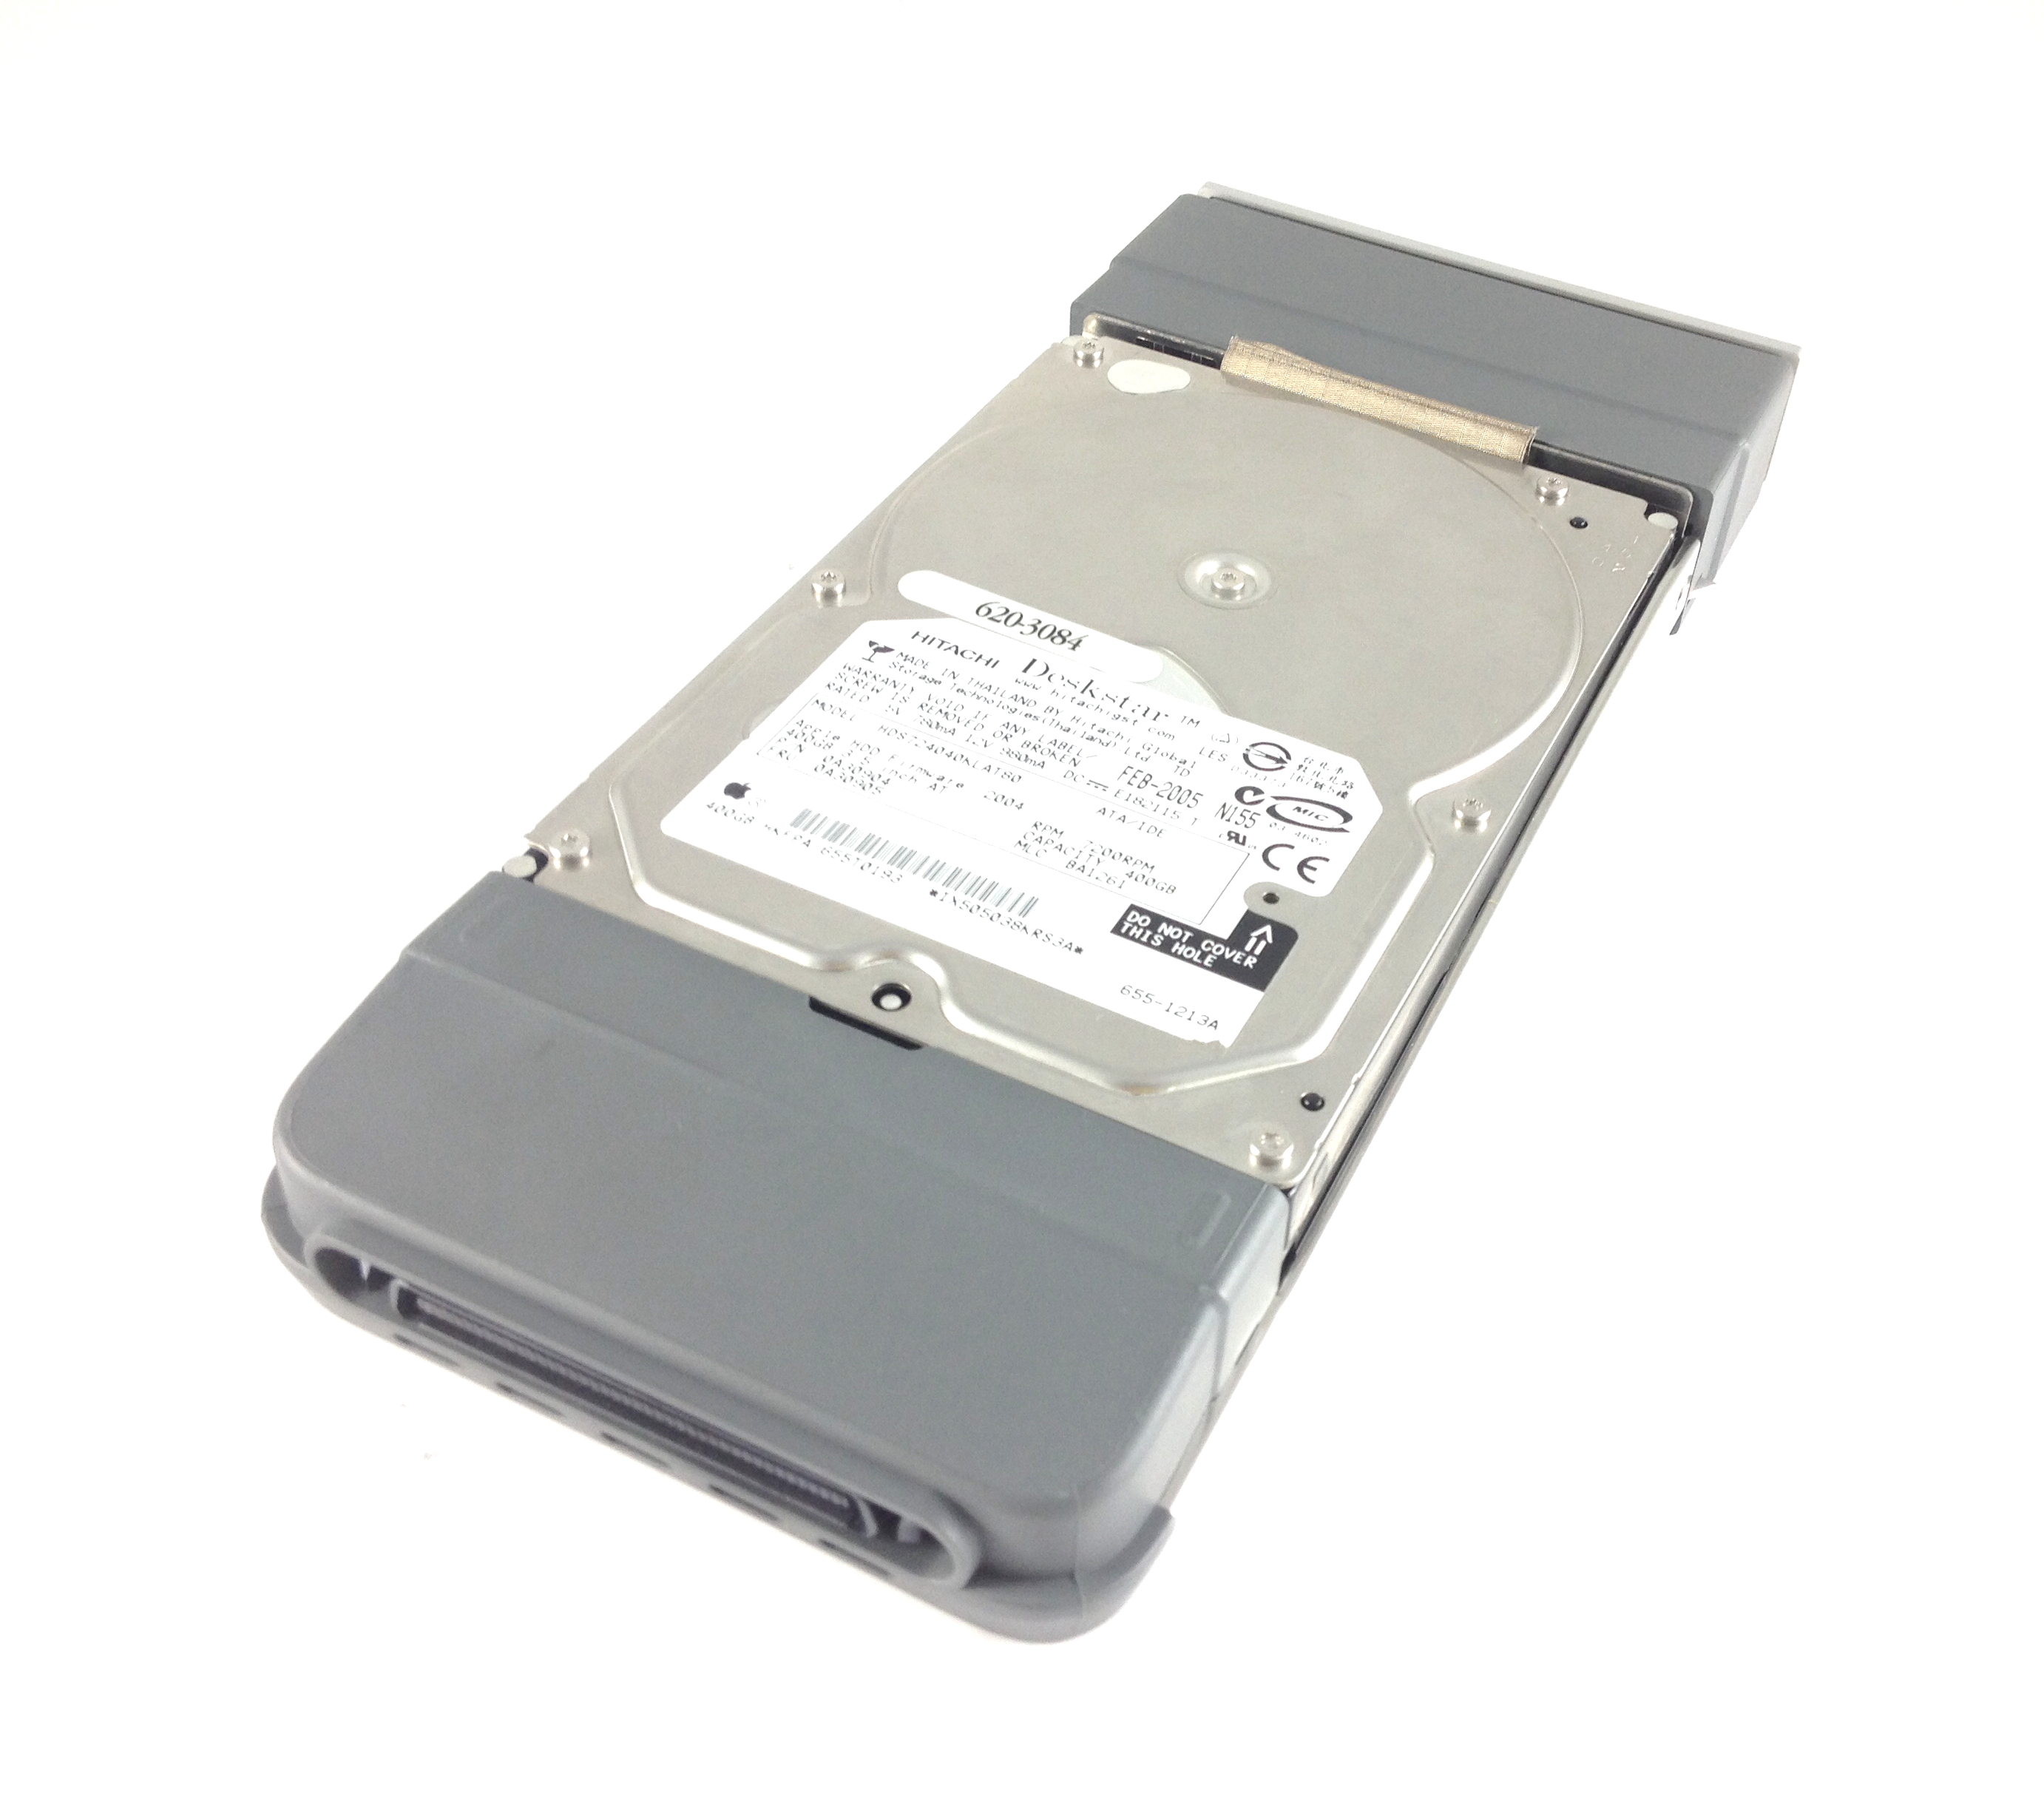 Apple XServe RAID Hitachi 400GB IDE 7.2K Ata 3.5'' Hard Drive (655T0193)